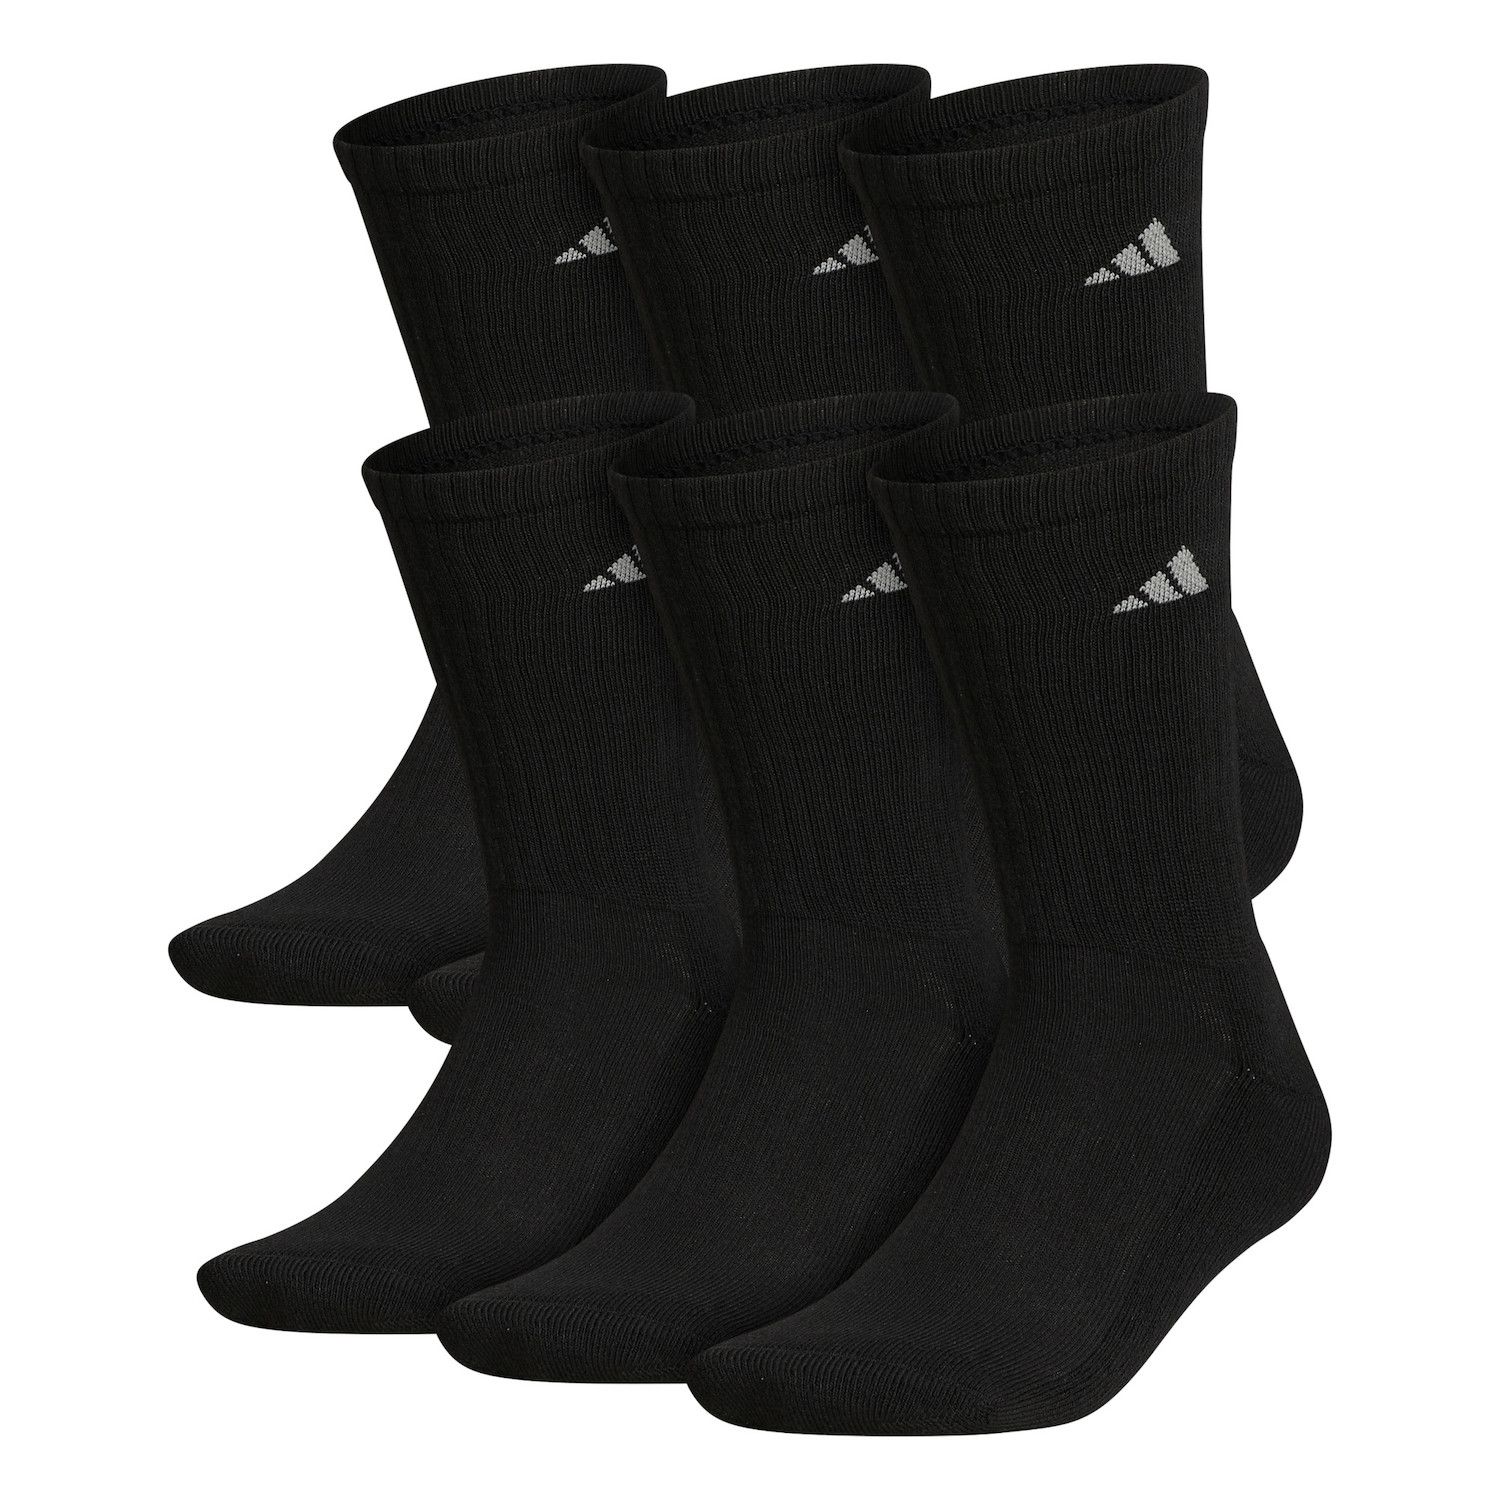 adidas men's performance socks